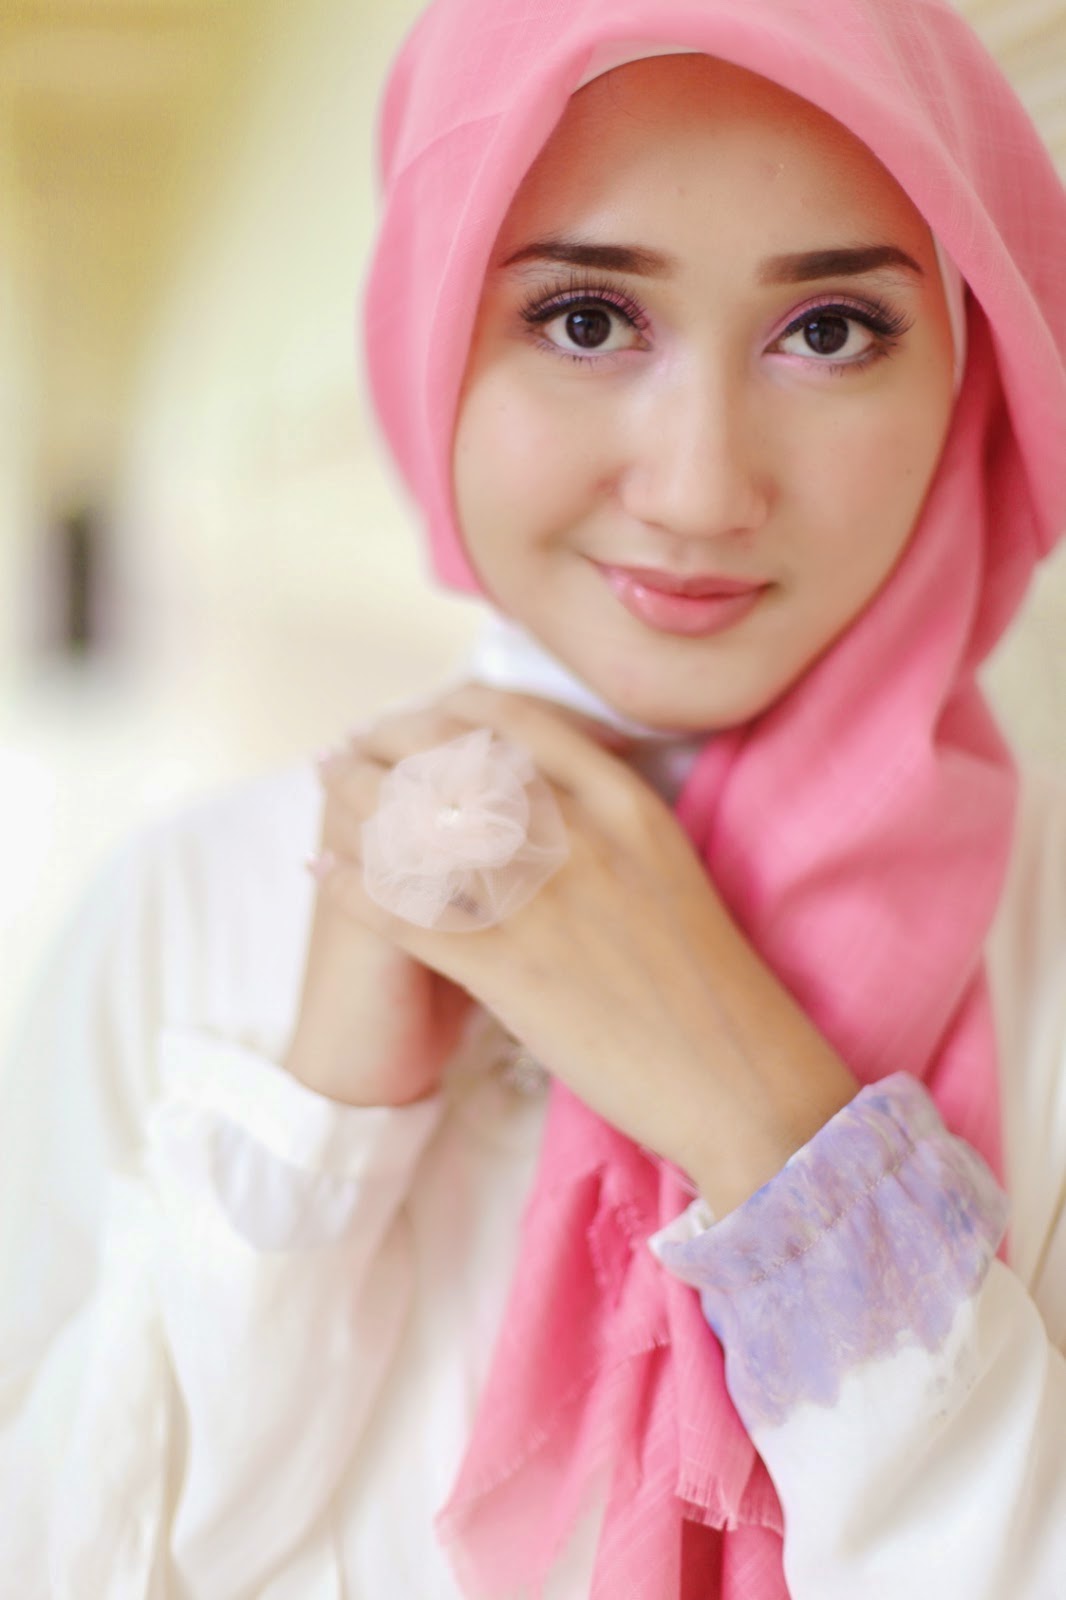 20 Gambar Keren Tutorial Hijab Indonesia Jenahara Paling Lengkap Tutorial